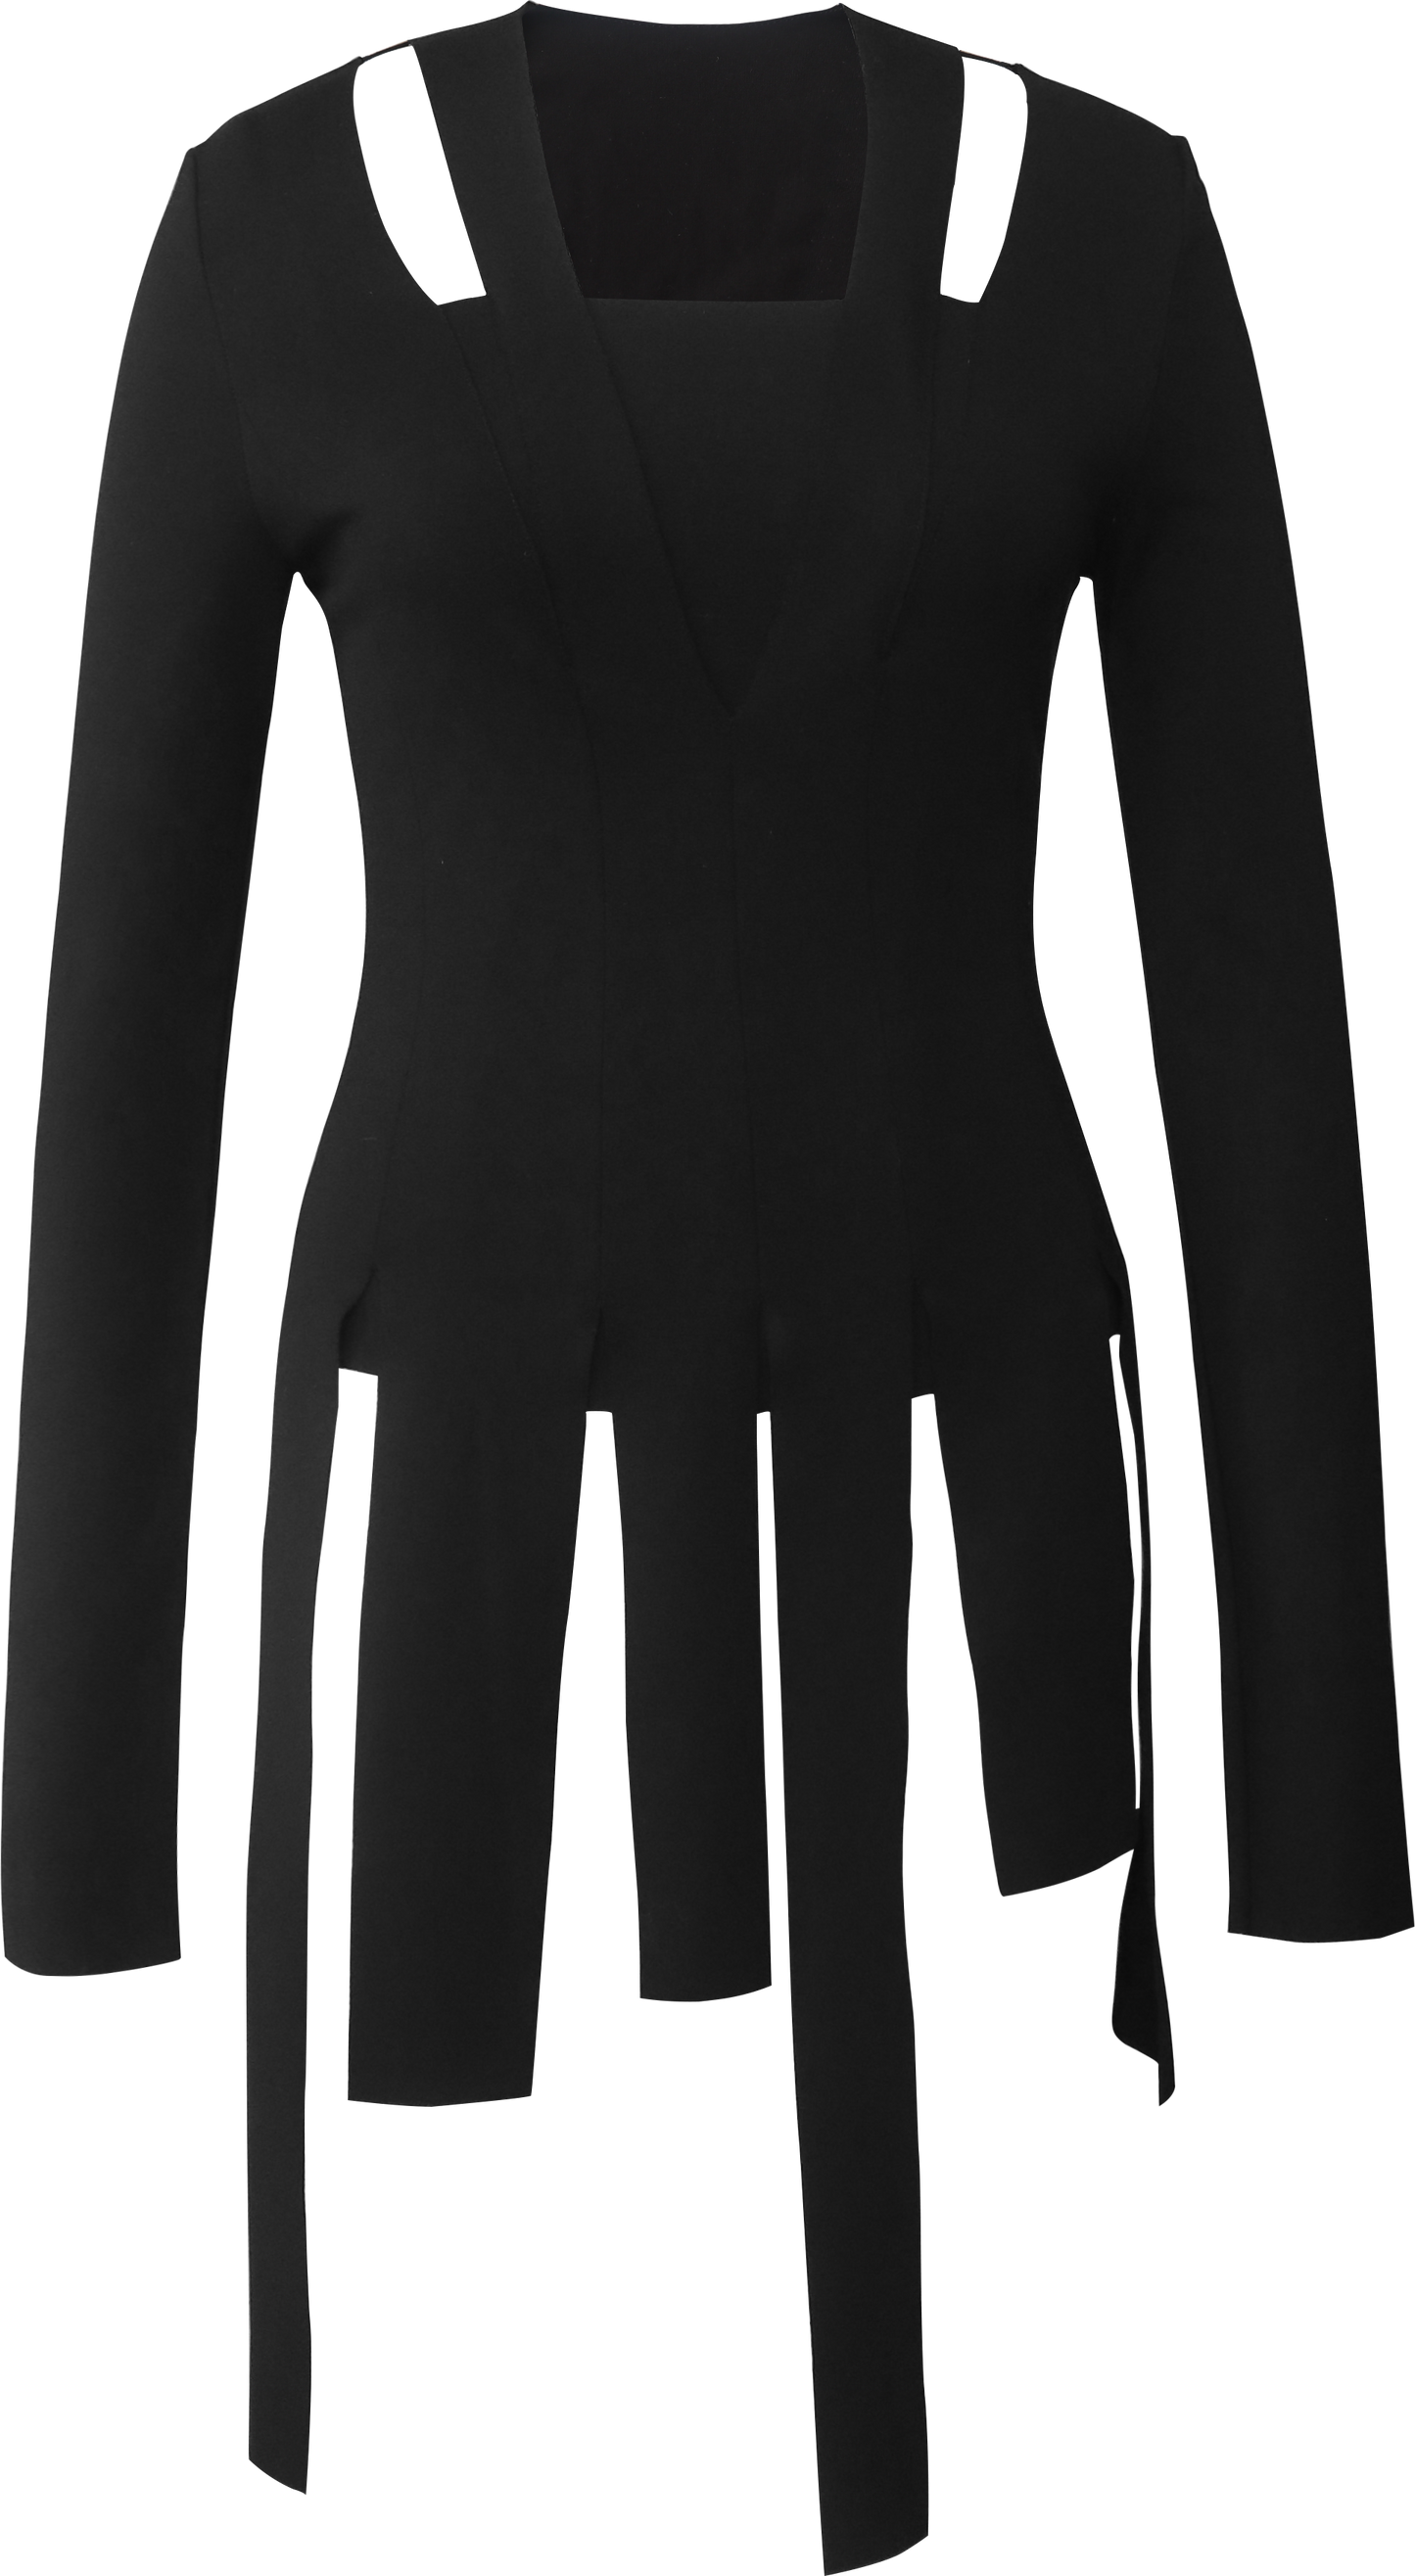 Irregular Black Long-Sleeved Base Shirt